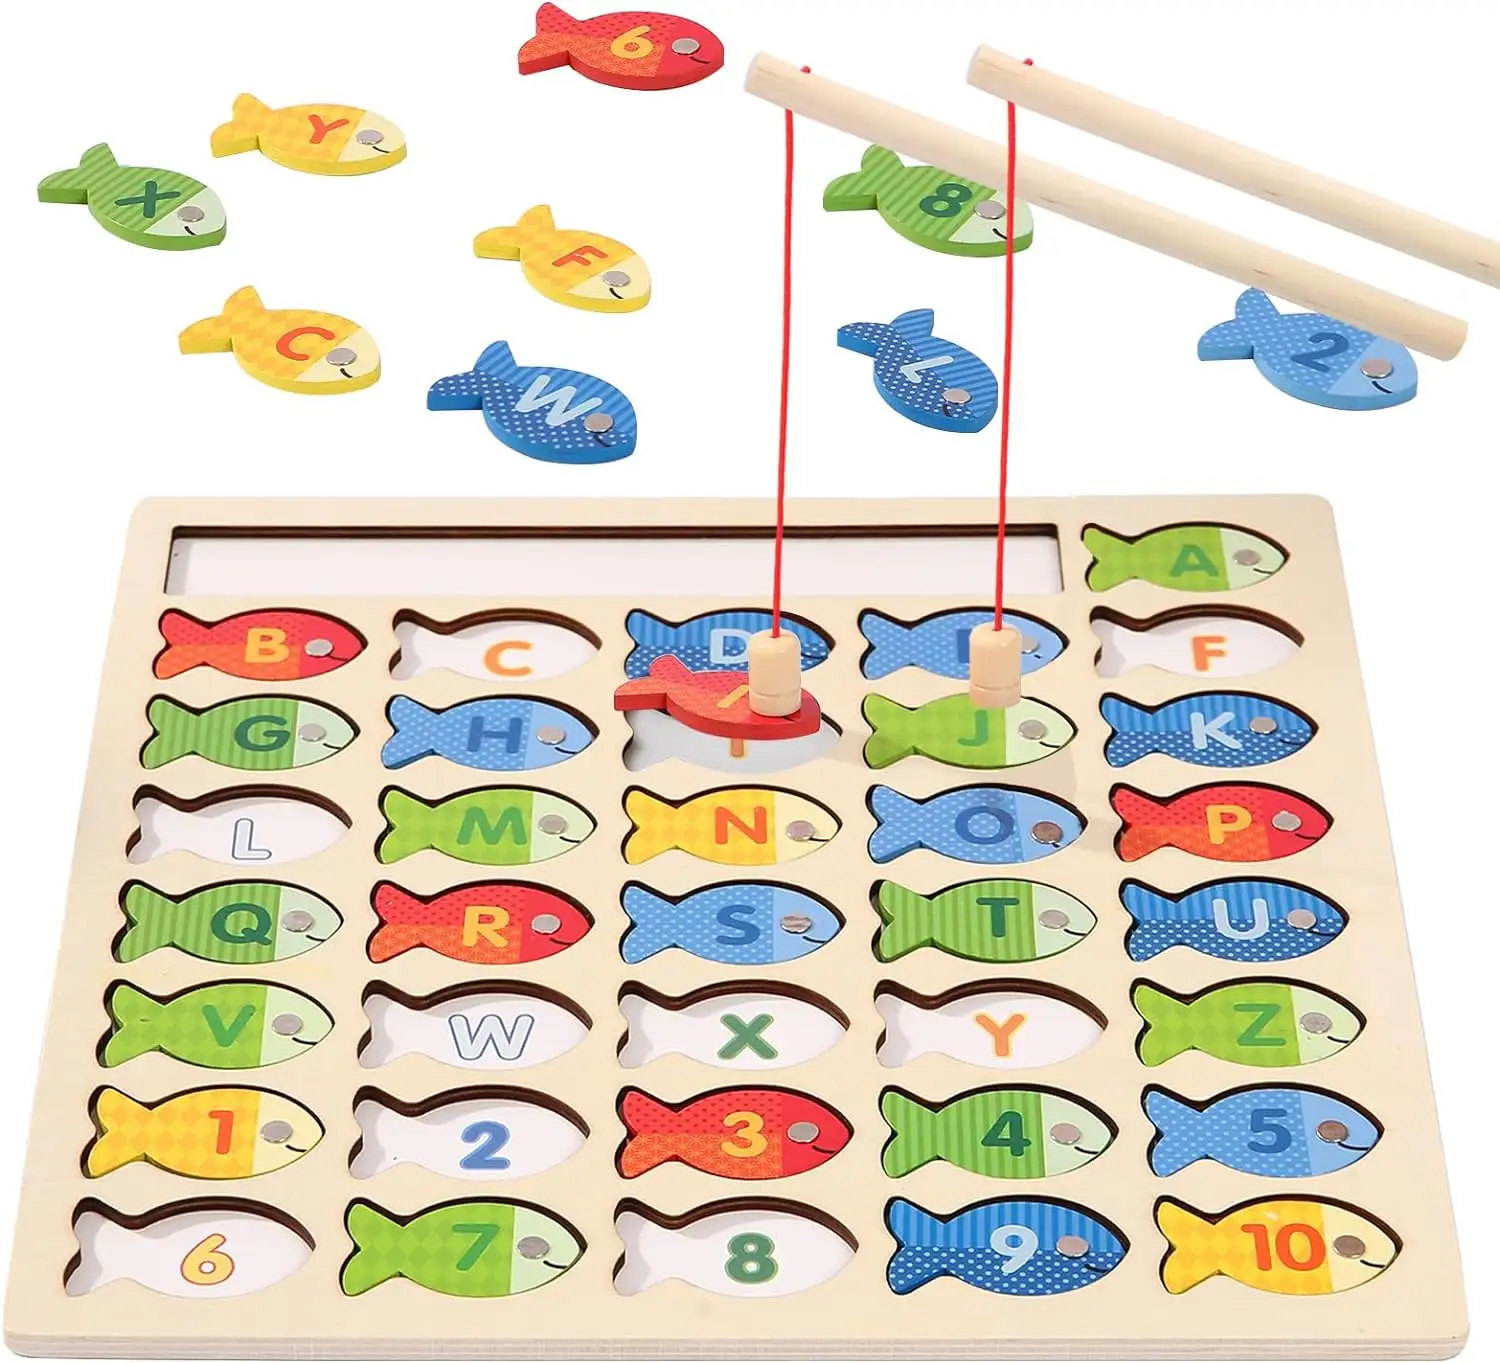 PT 도매 알파벳 물고기 잡기 계산 게임 퍼즐 숫자와 문자 나무 자기 낚시 게임 유아를위한 게임